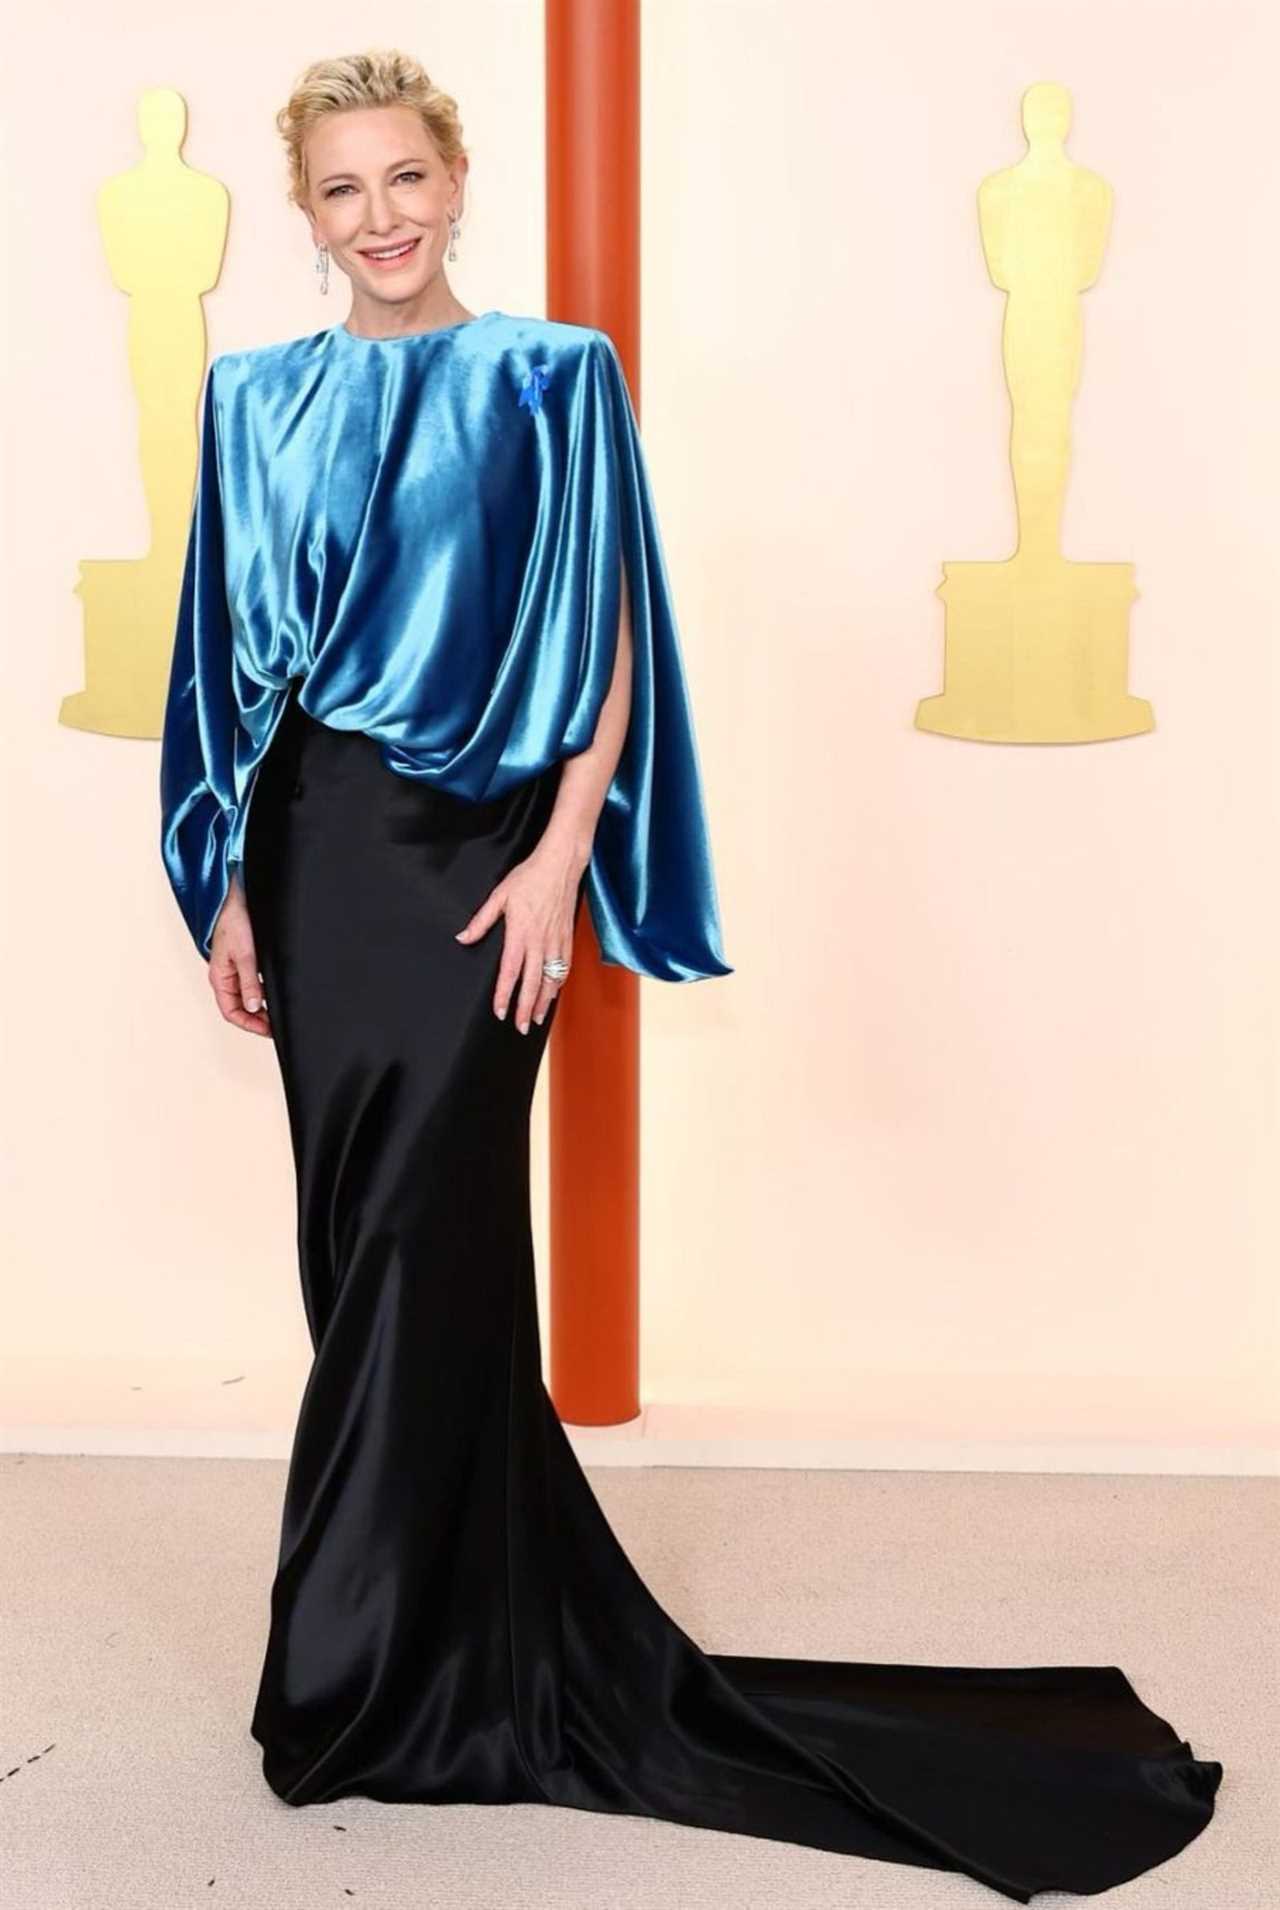 MEGA’s 10 Best Dressed at the Oscars